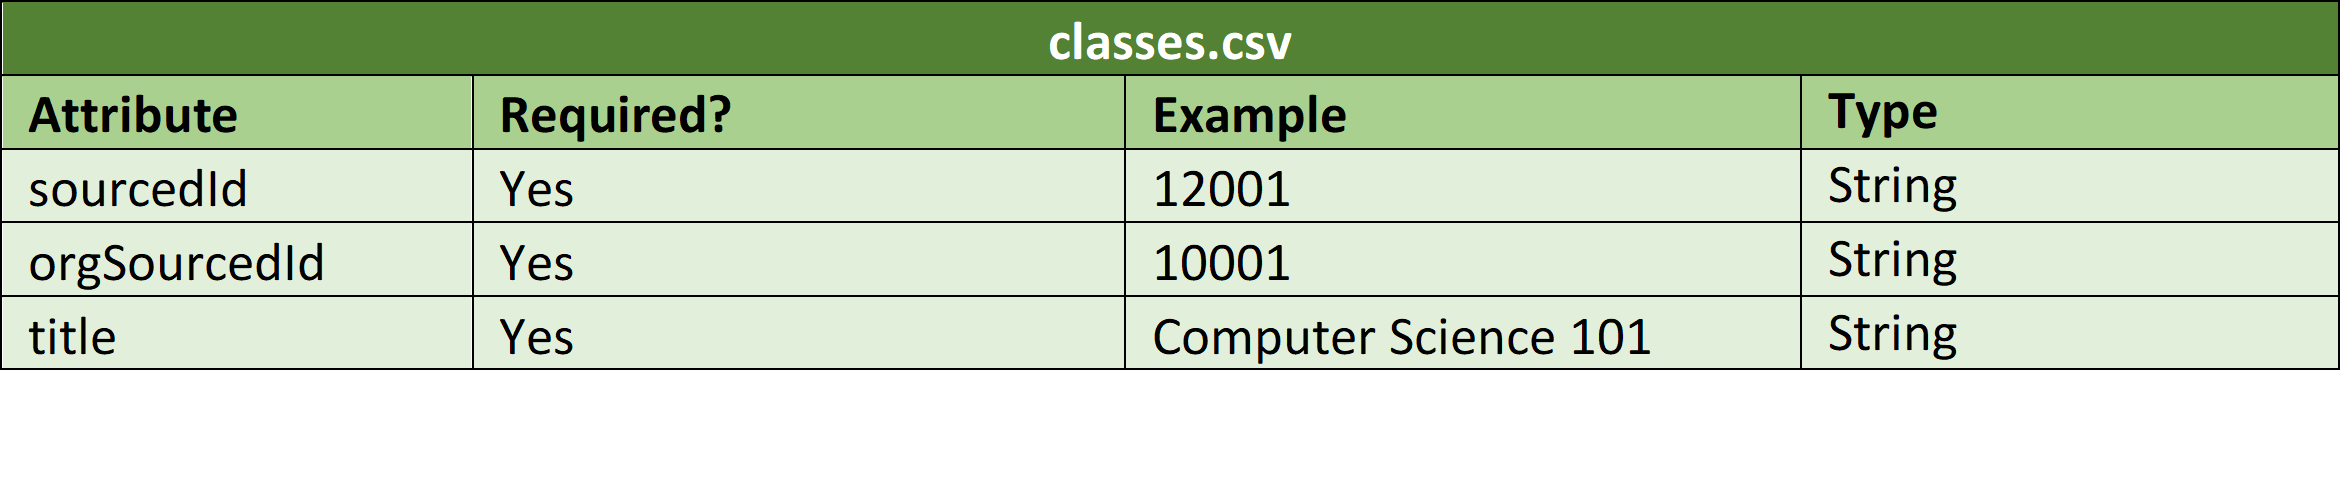 csv-file-v2-4.png.